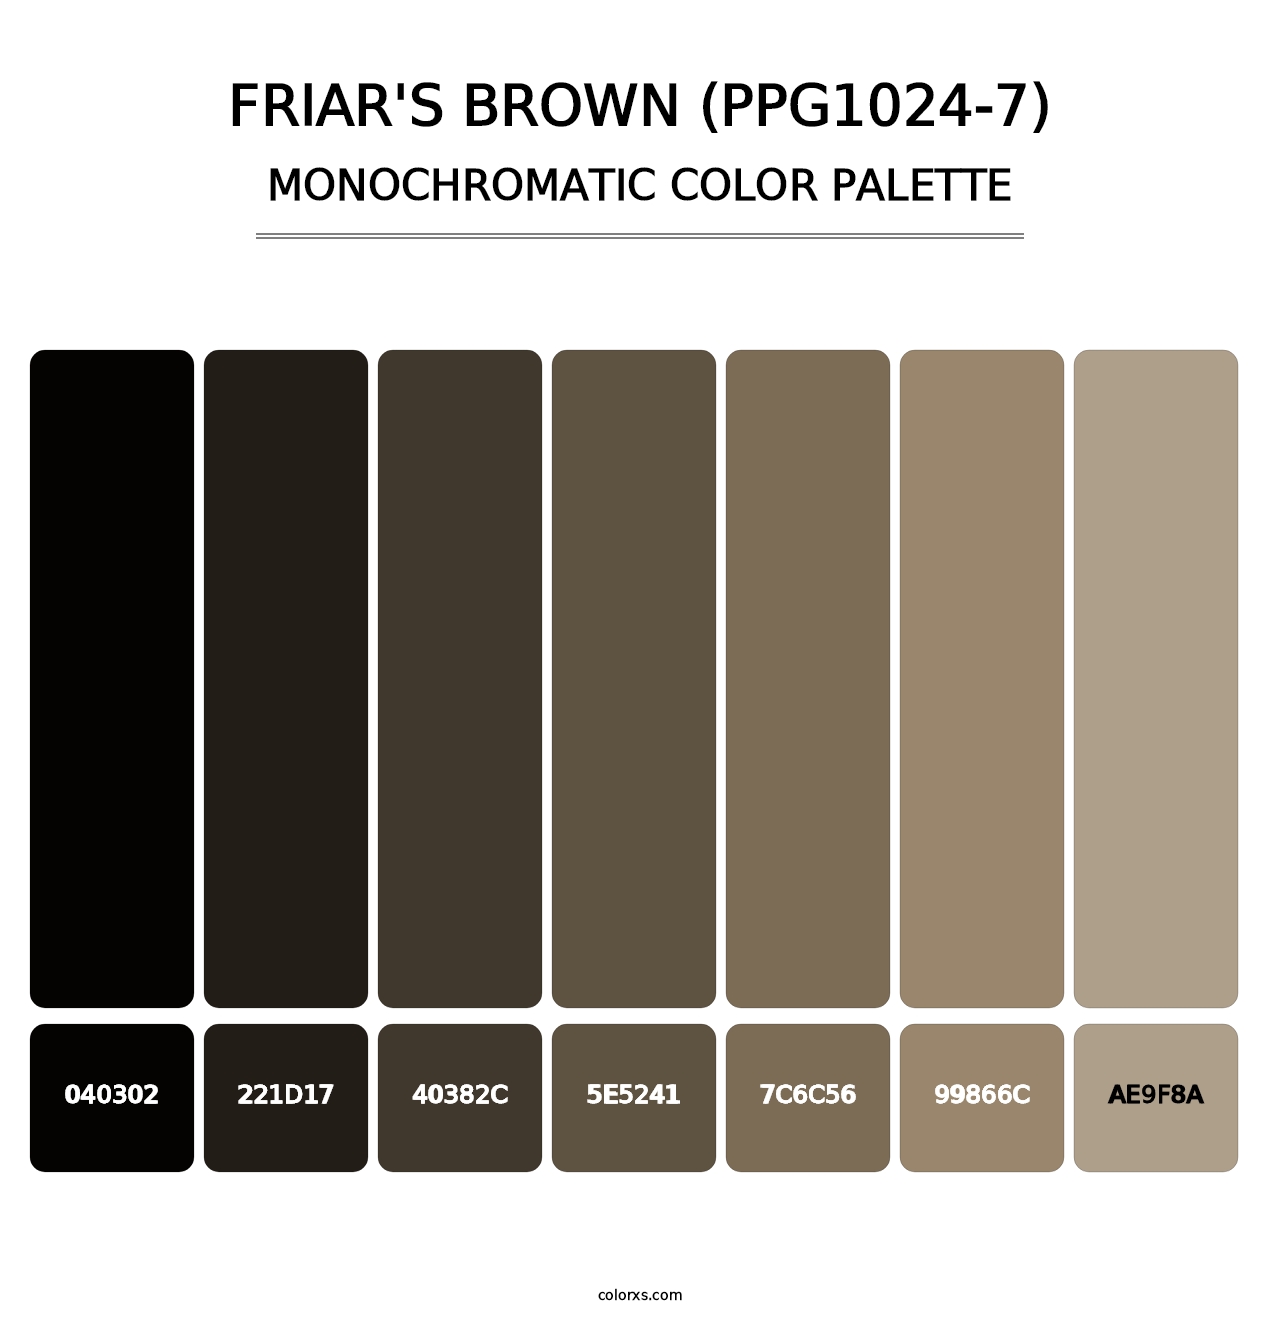 Friar's Brown (PPG1024-7) - Monochromatic Color Palette